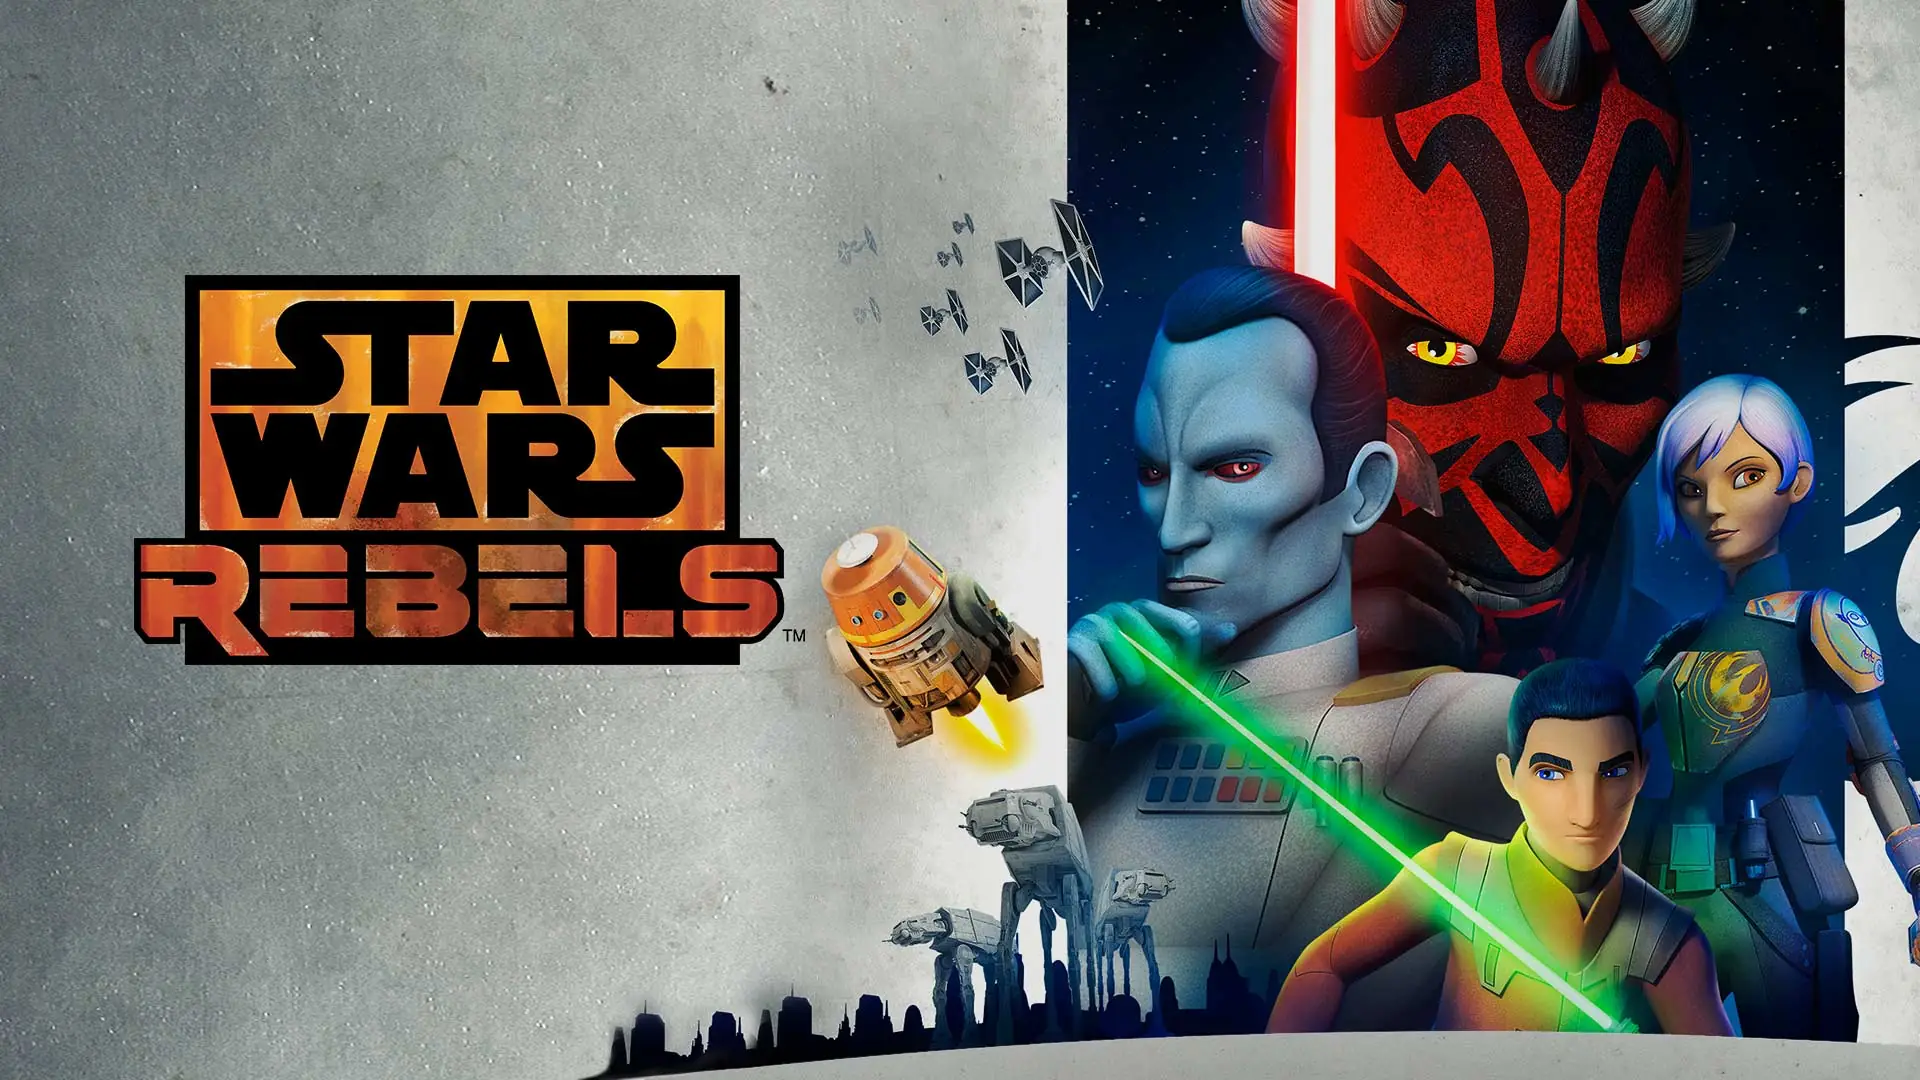 Star Wars Rebels Season 3 Multi Audio Hindi Eng Tamil Telugu 720p 1080p HD WEB DL ESub Rare Toons India